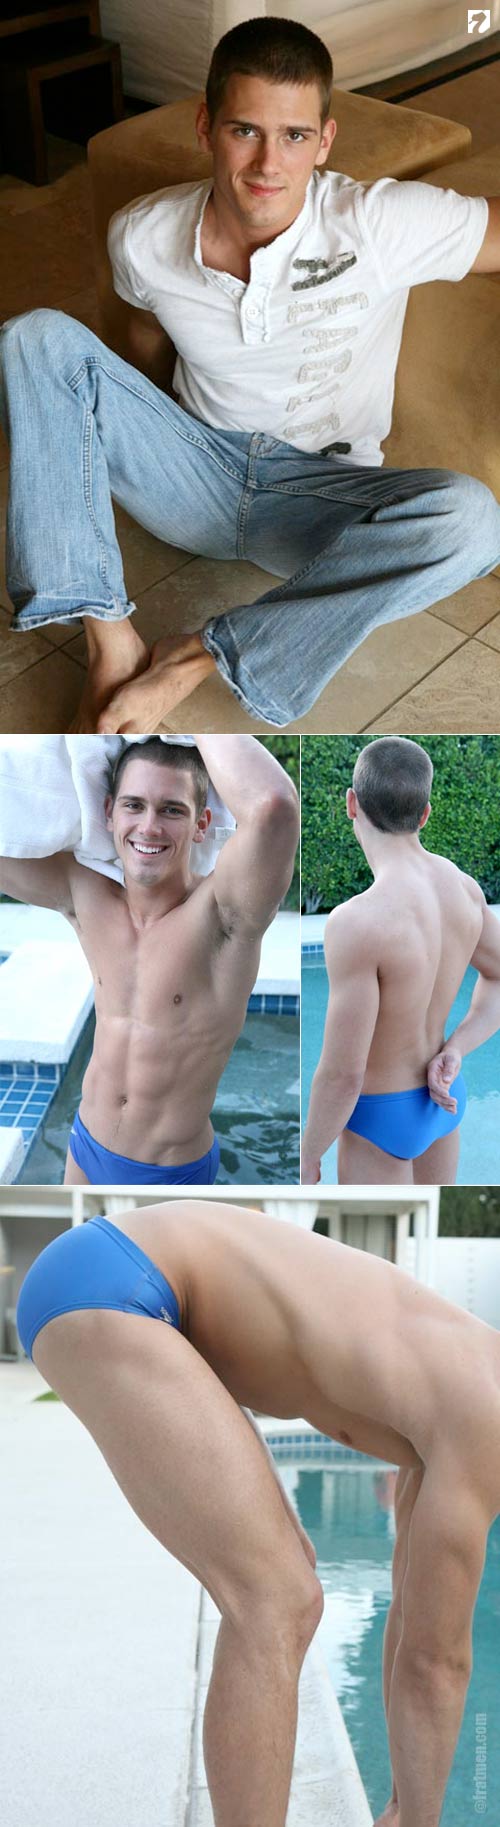 Colby (Naked College Swimmer) at Fratmen.tv